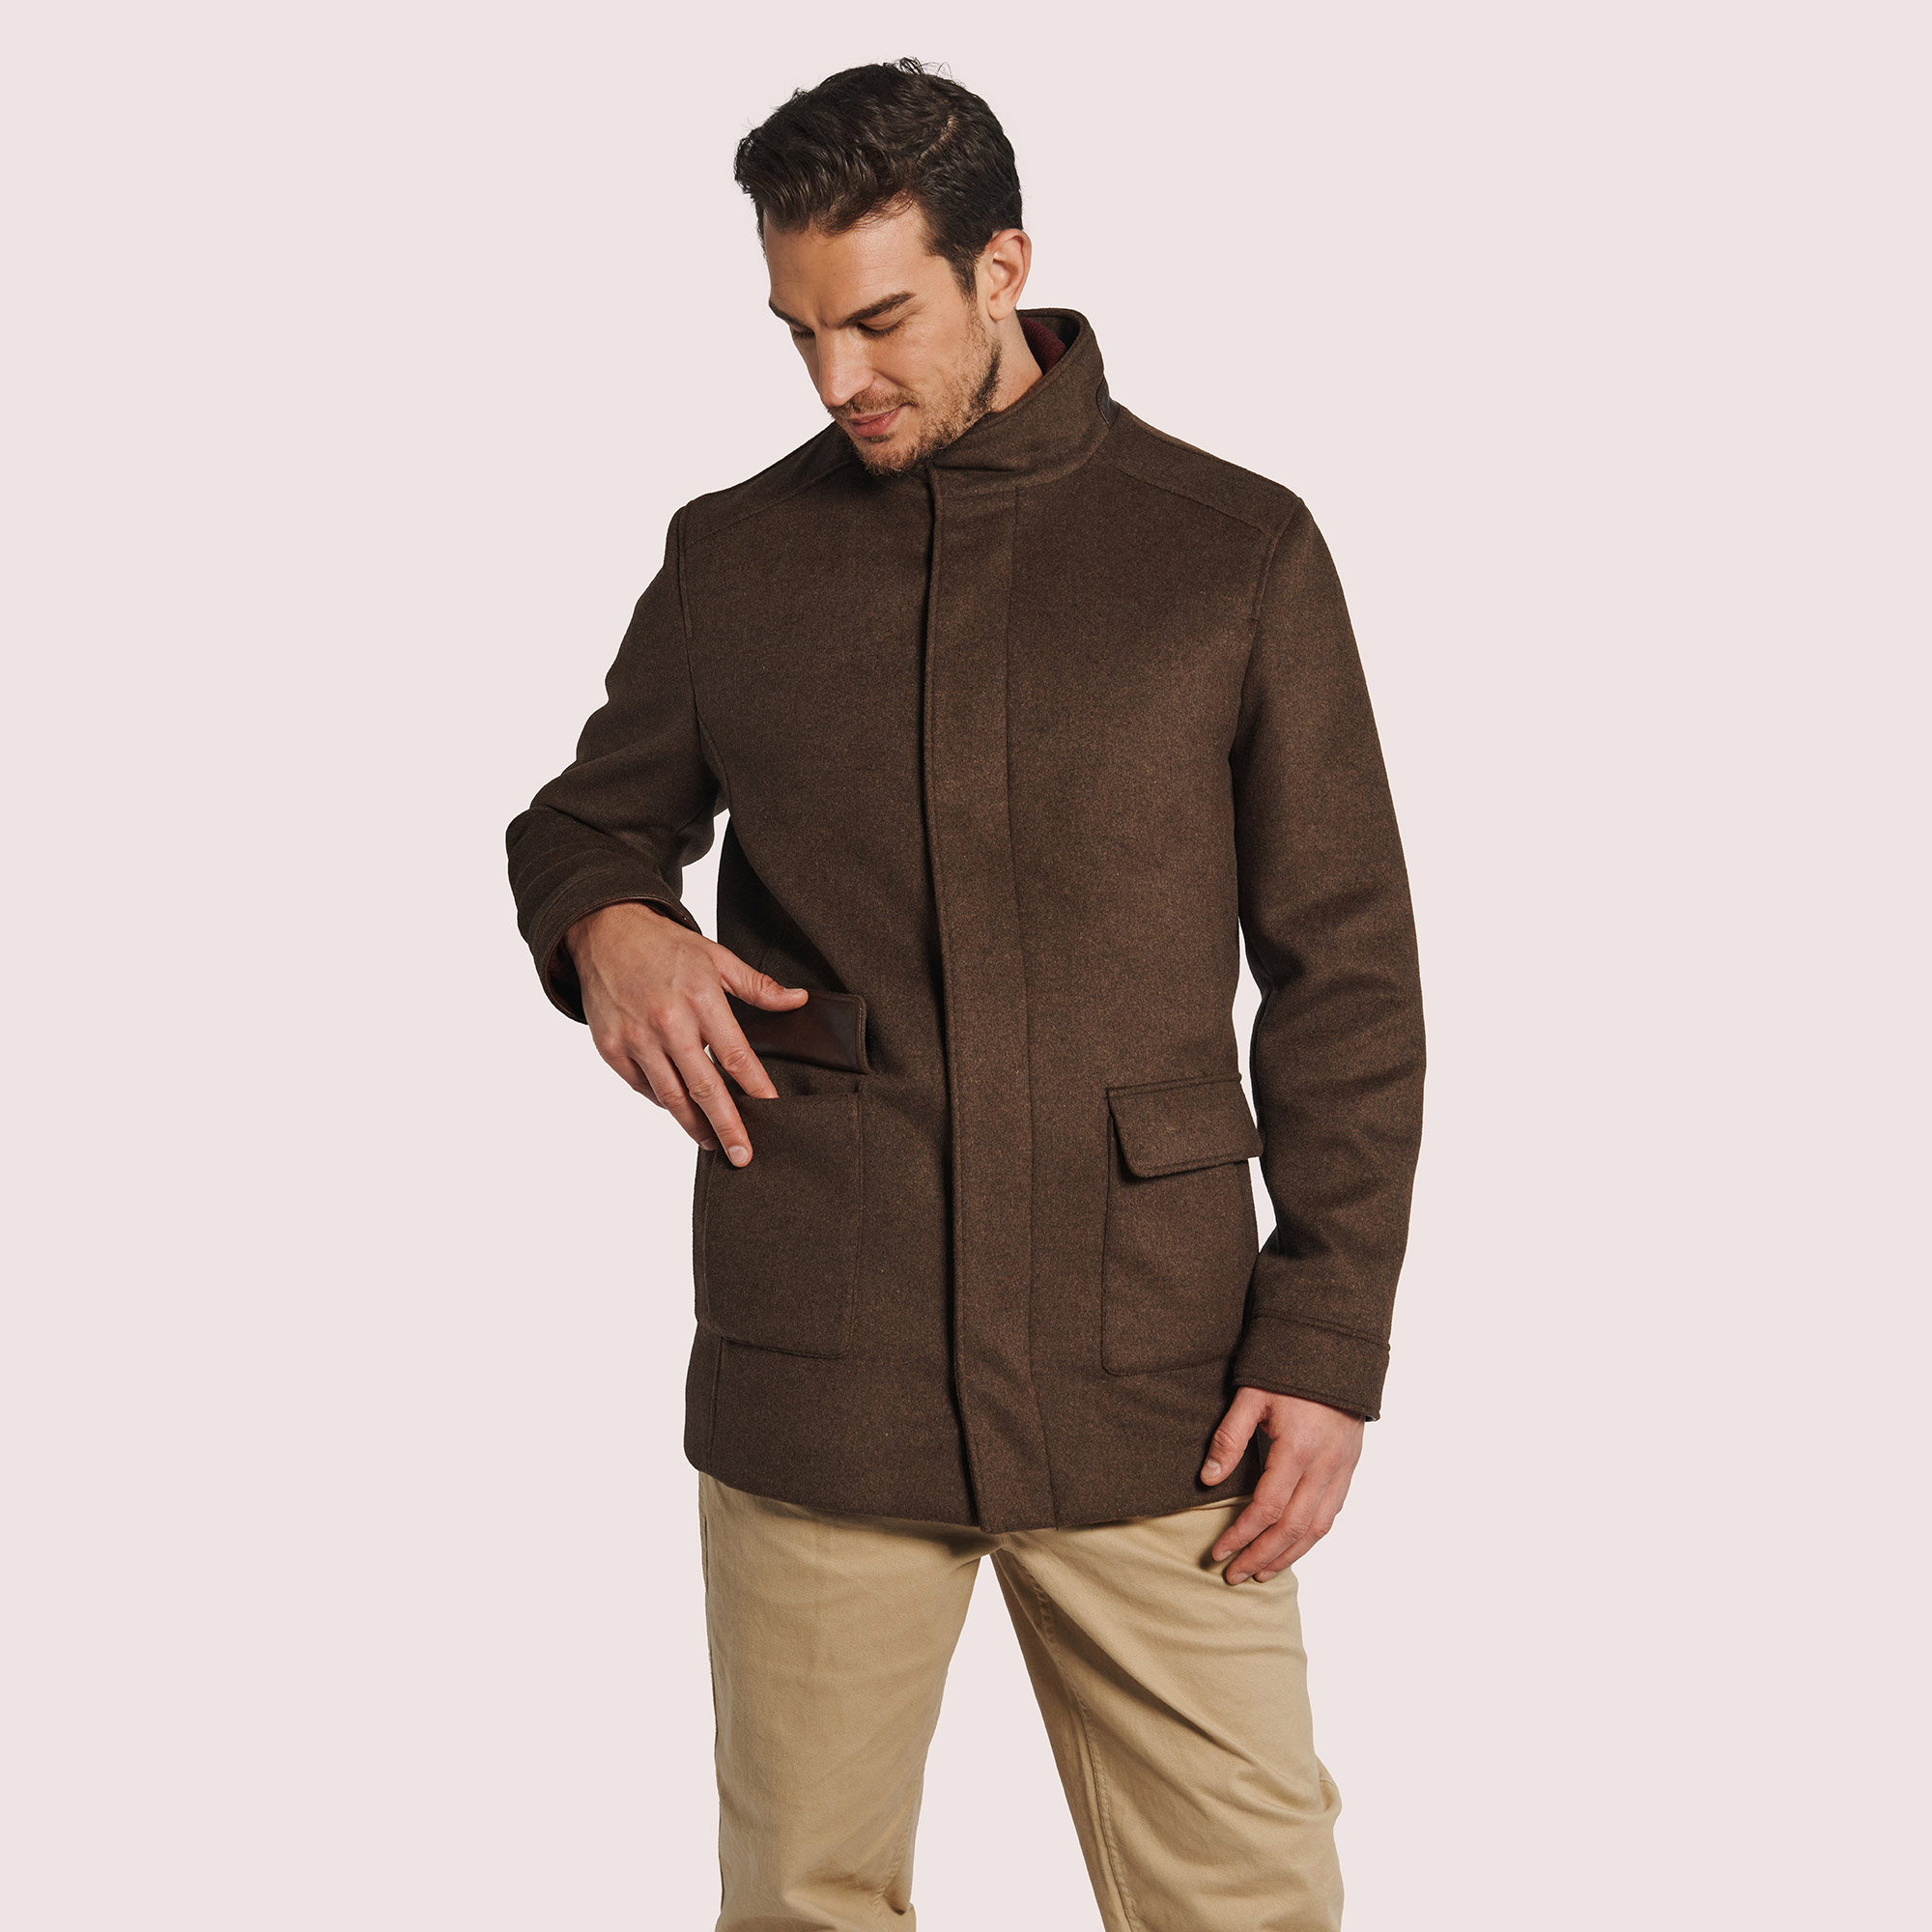 Cresson Cashmere/Wool Coat